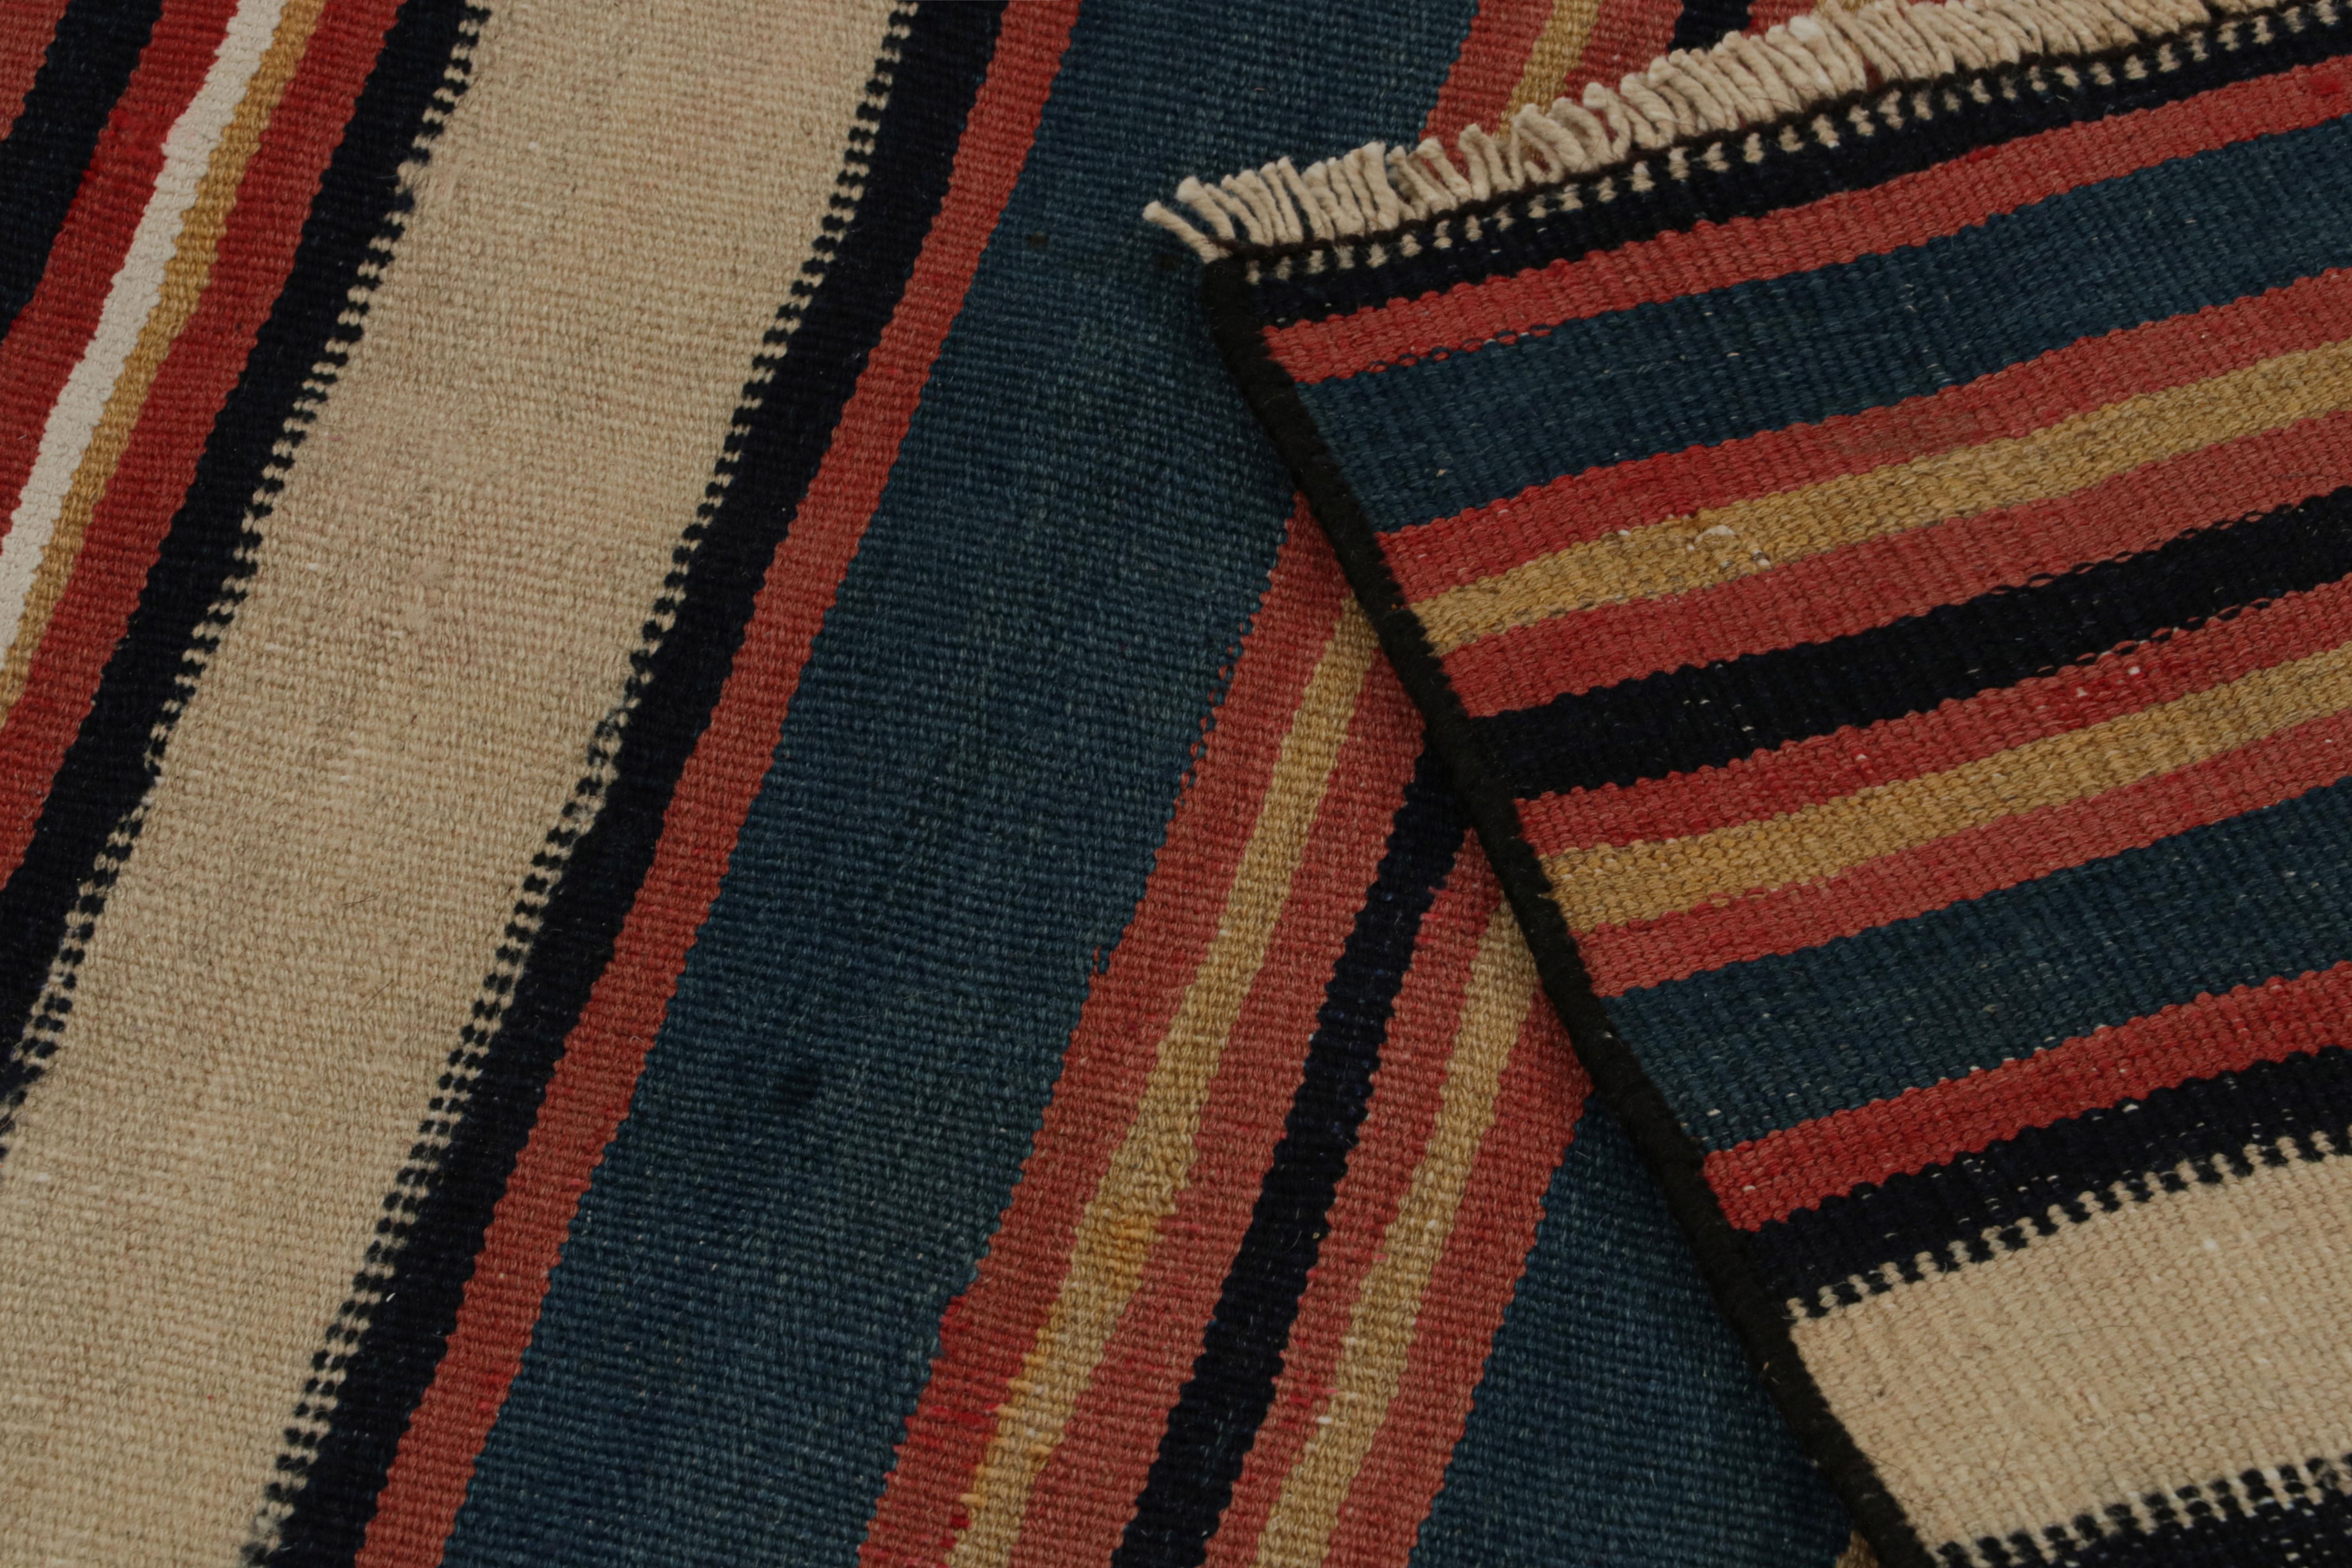 Wool Vintage Afghani tribal Kilim runner rug, with Stripes, from Rug & Kilim For Sale